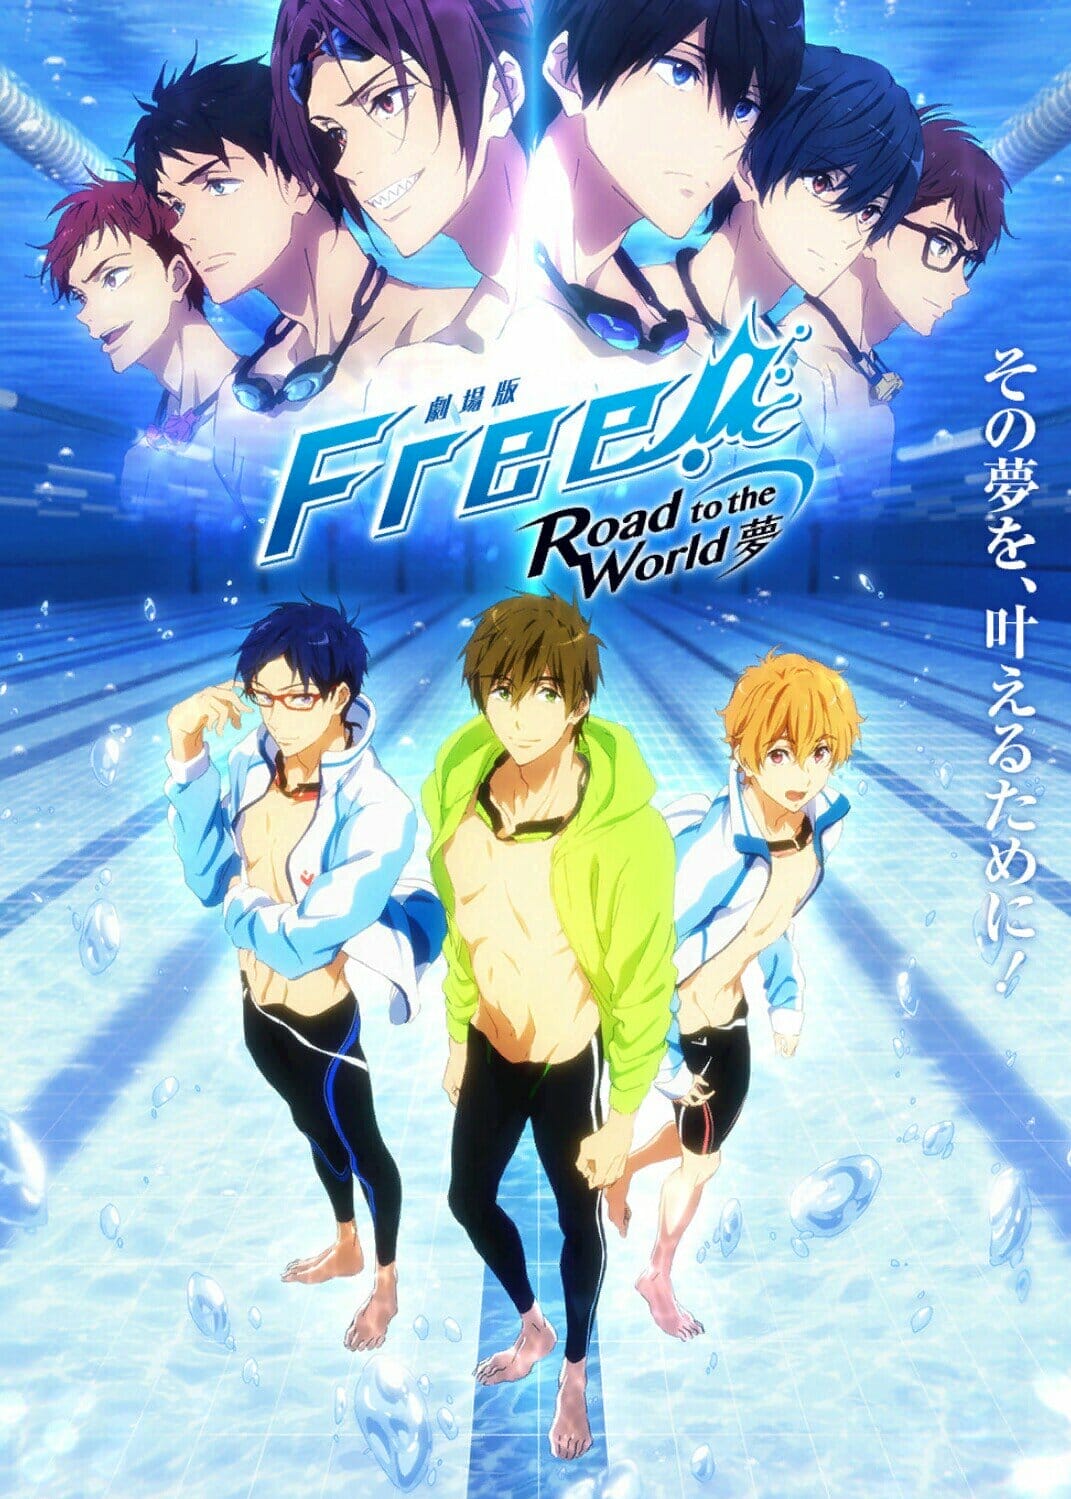 Free! - Iwatobi Swim Club, News